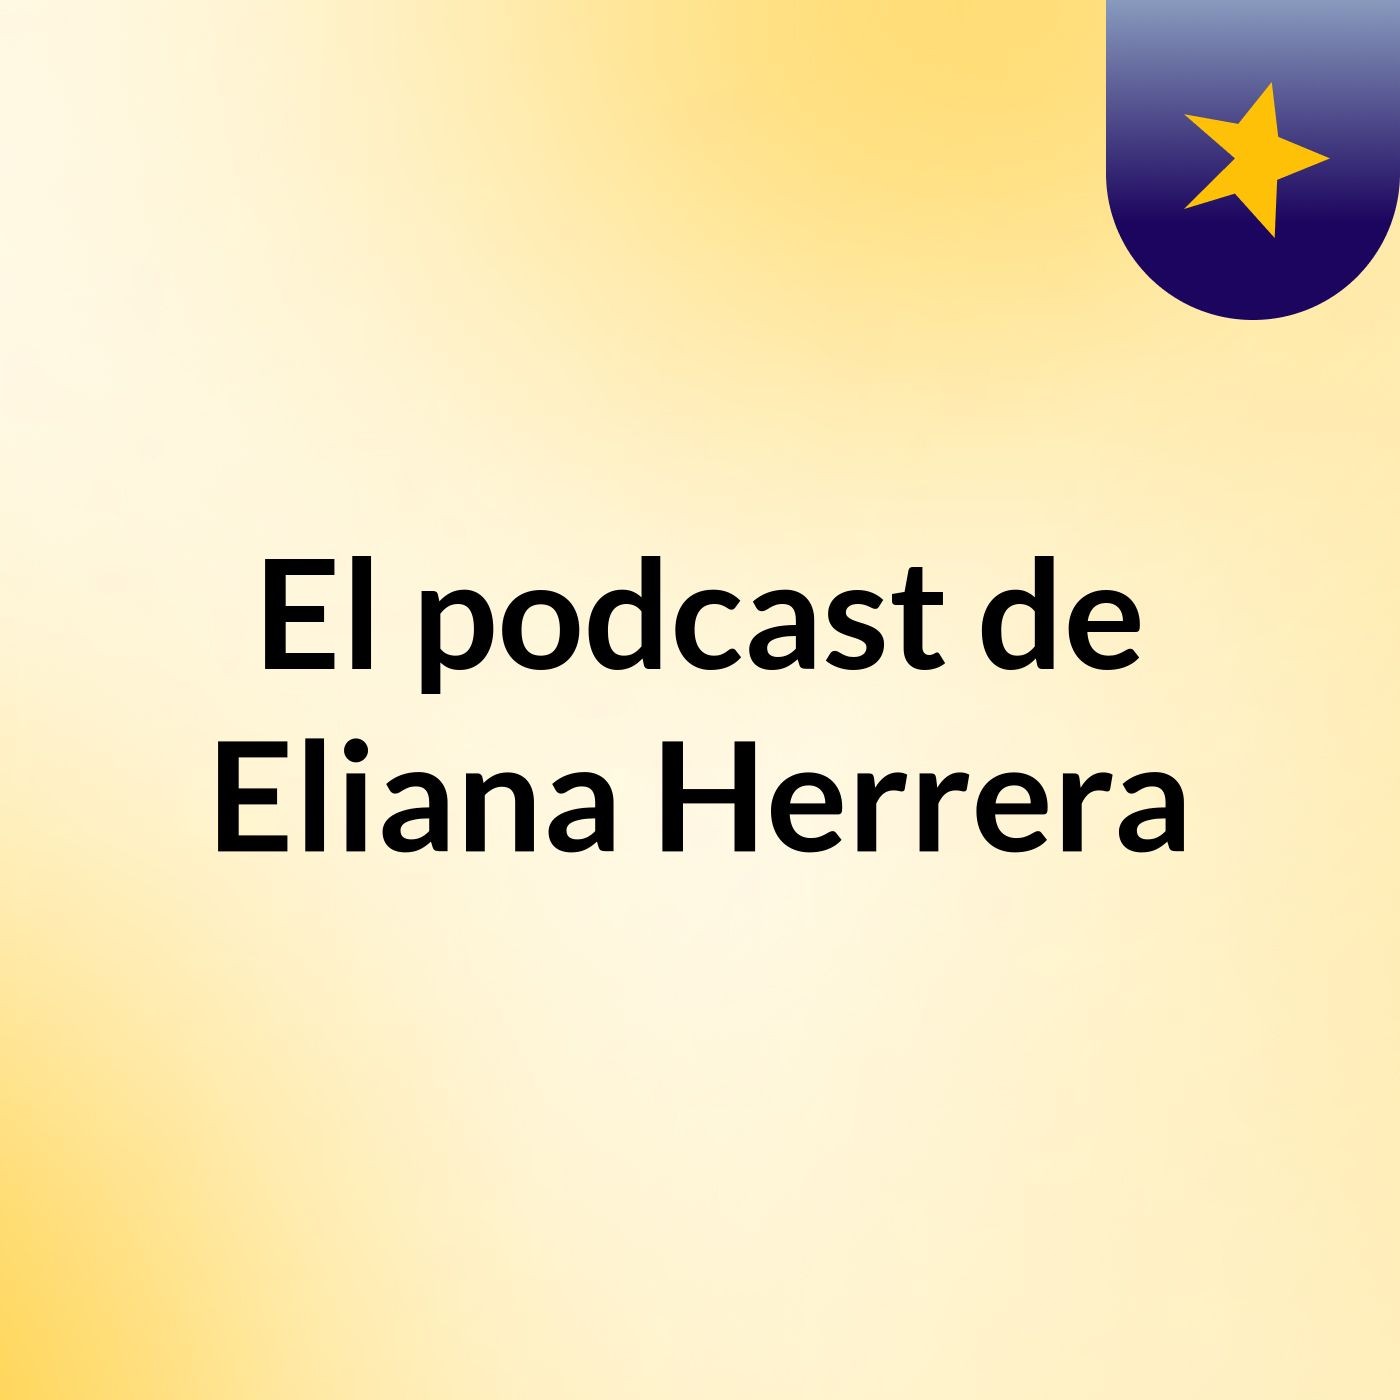 El podcast de Eliana Herrera